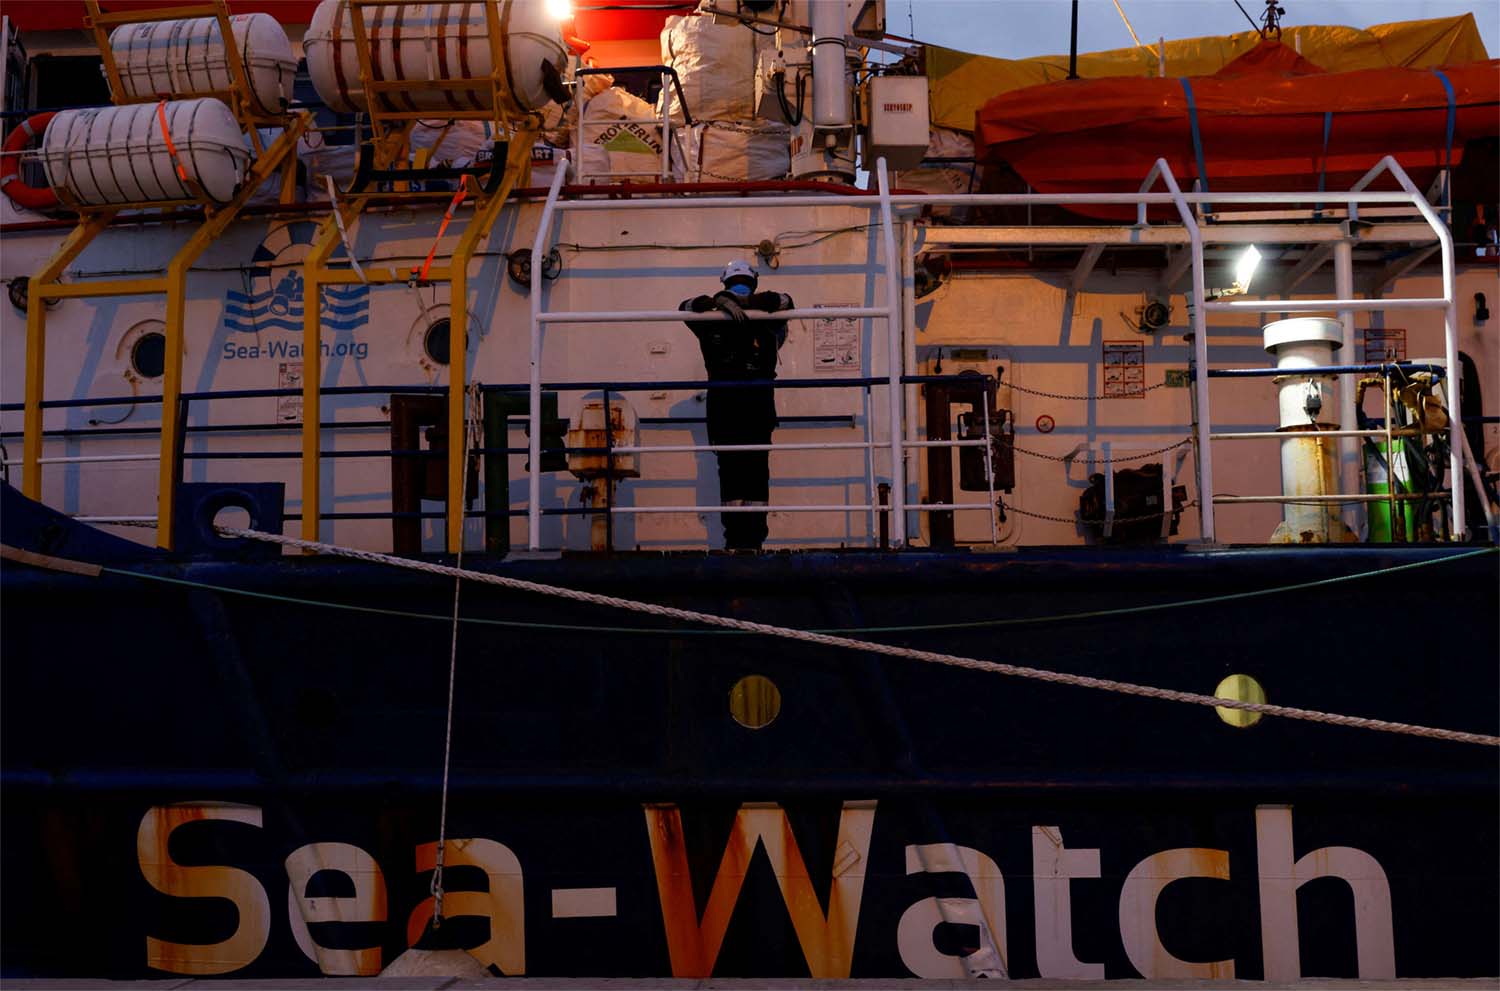 The German NGO migrant rescue ship Sea-Watch 3